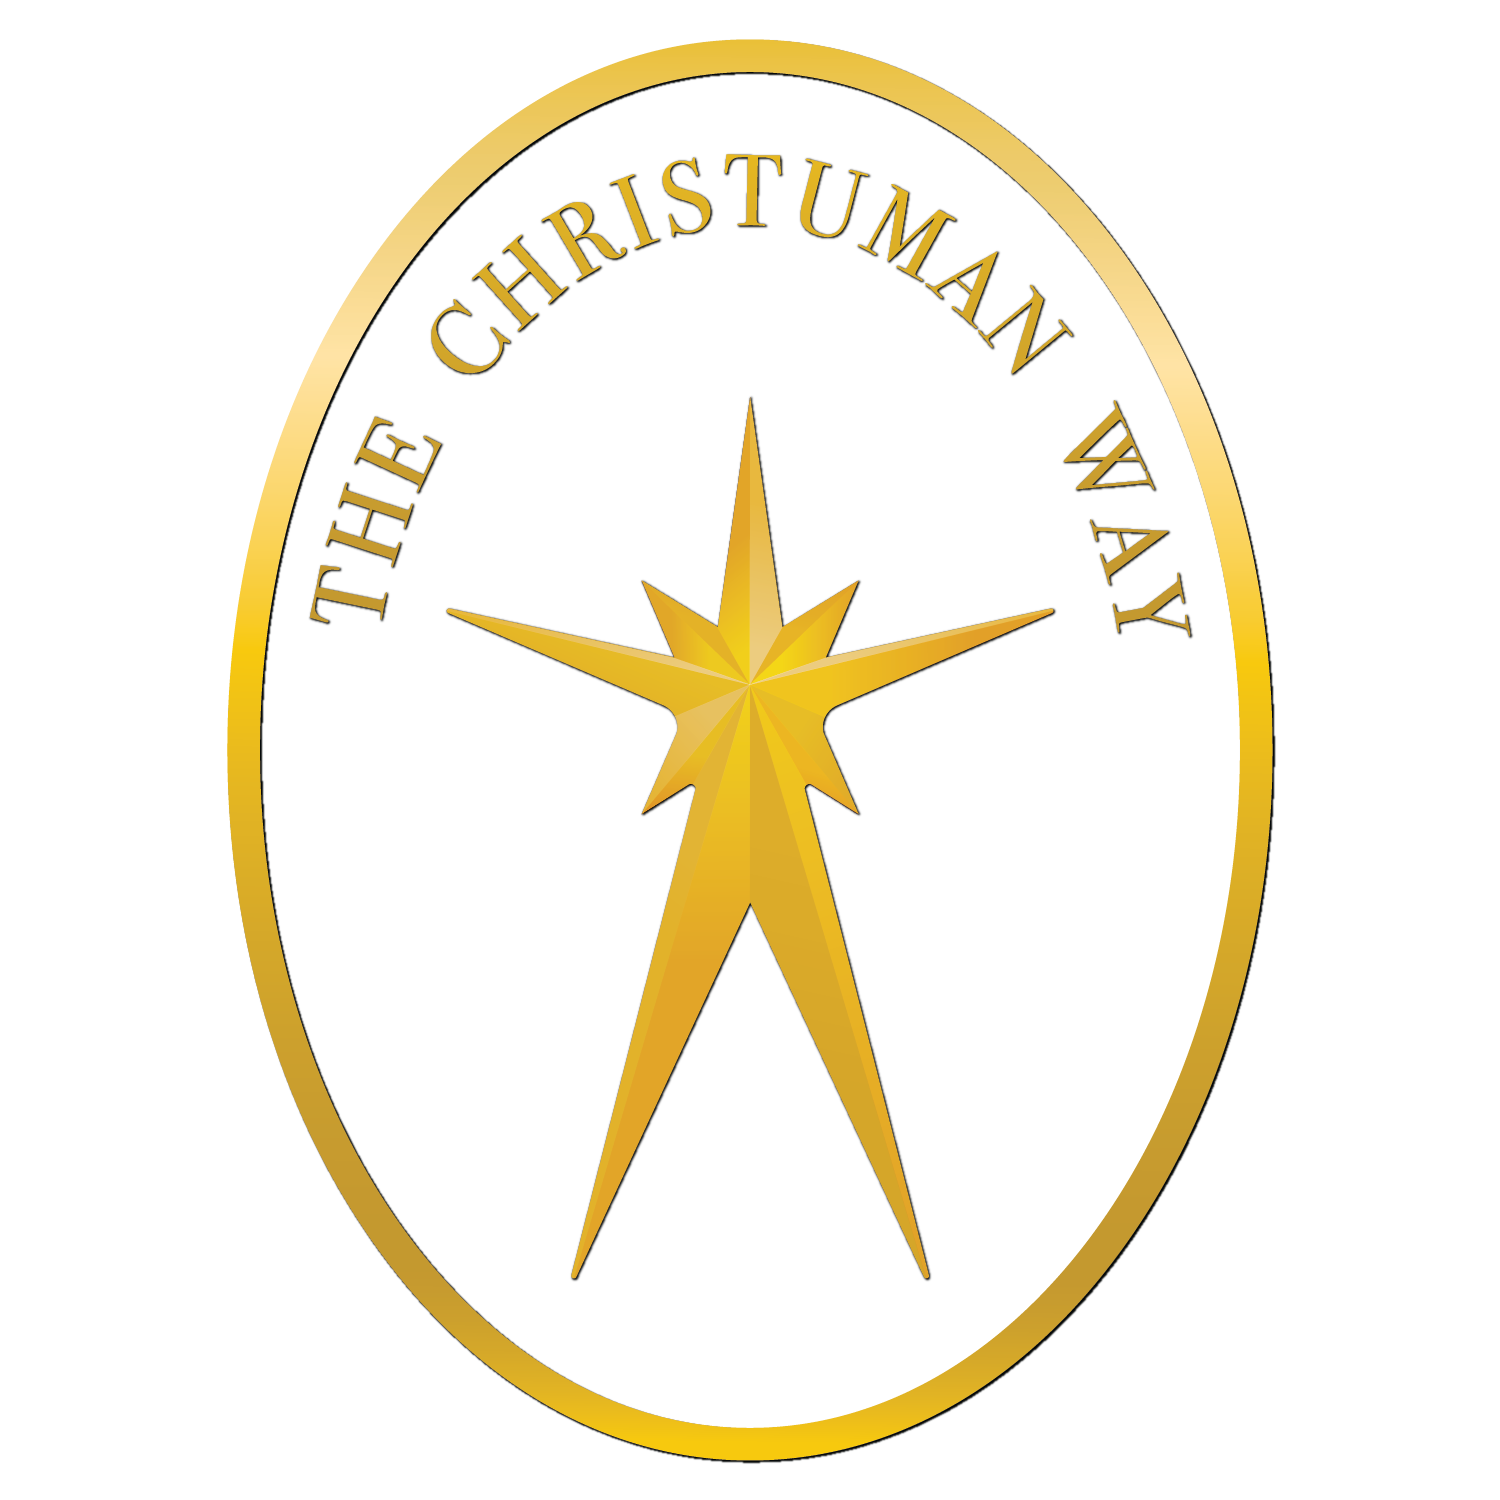 The Christuman Way